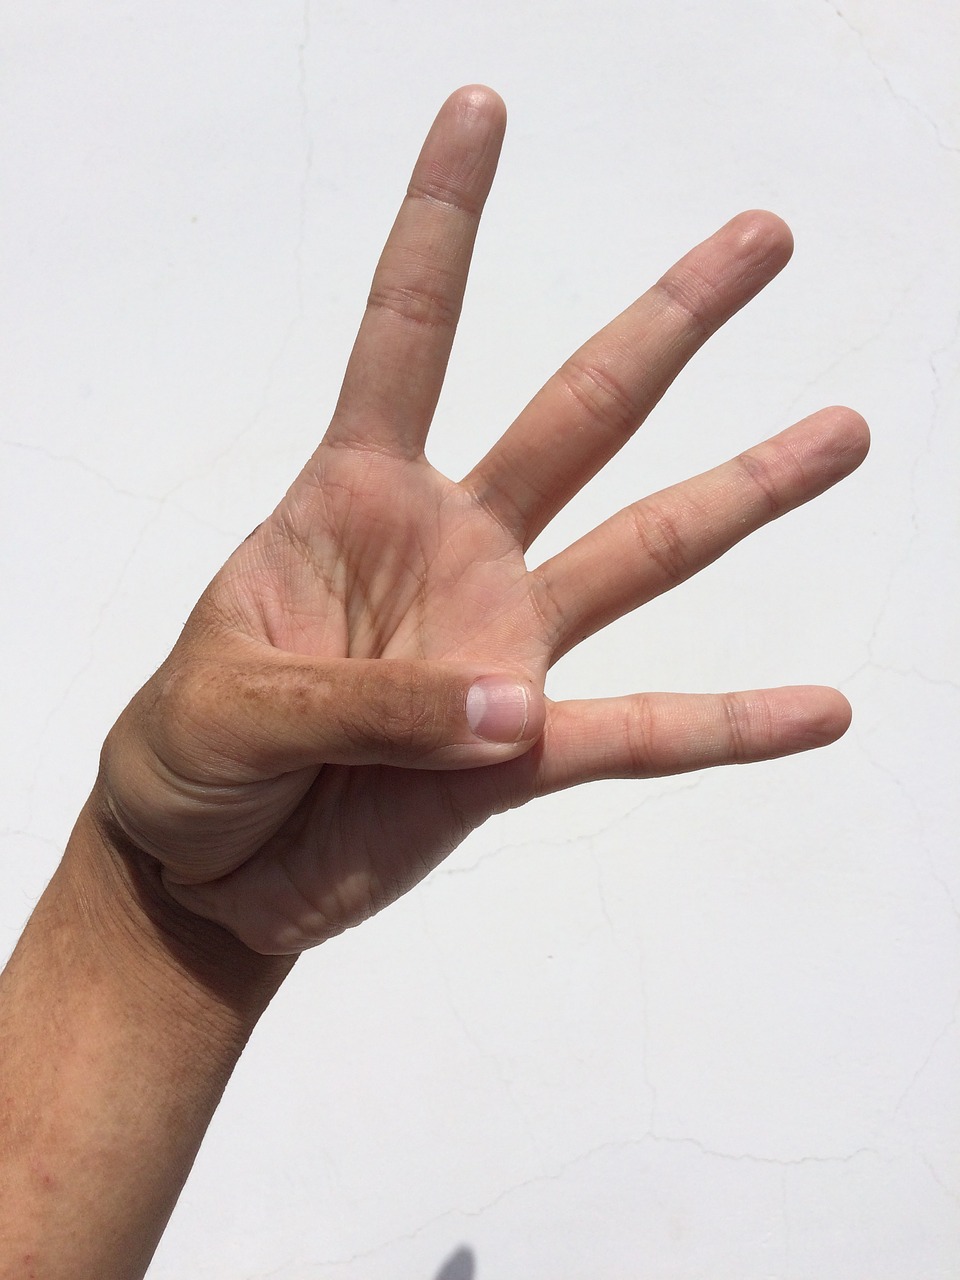 Четыре пальчика. Четыре пальца. 4пальца. Четыре пальца на руке жест. Рука человека.